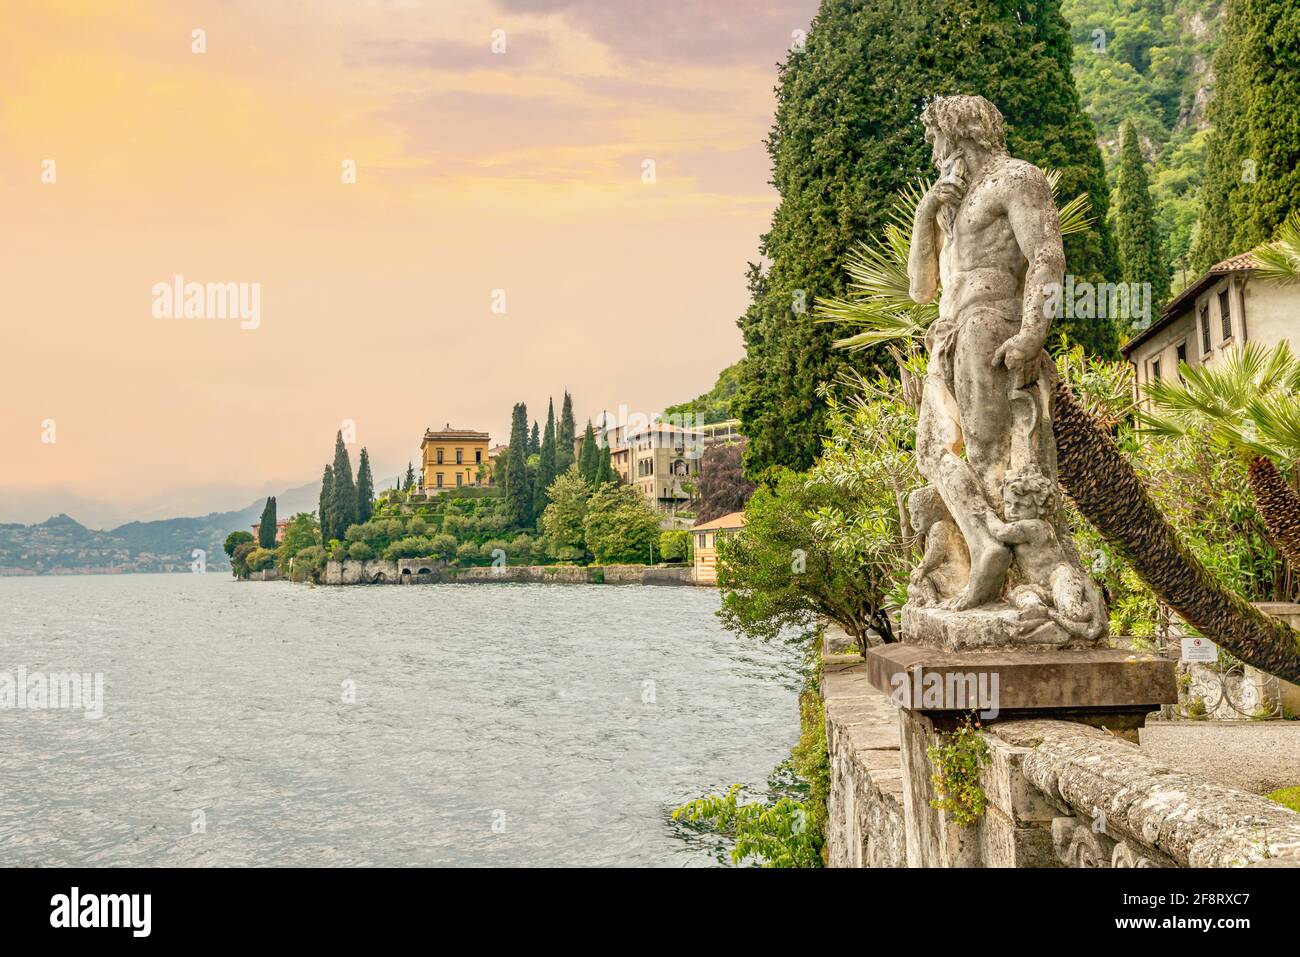 Ancient sculpture at the botanic Garden of Villa Monastero, Varenna, Lombardy, Italy Stock Photo